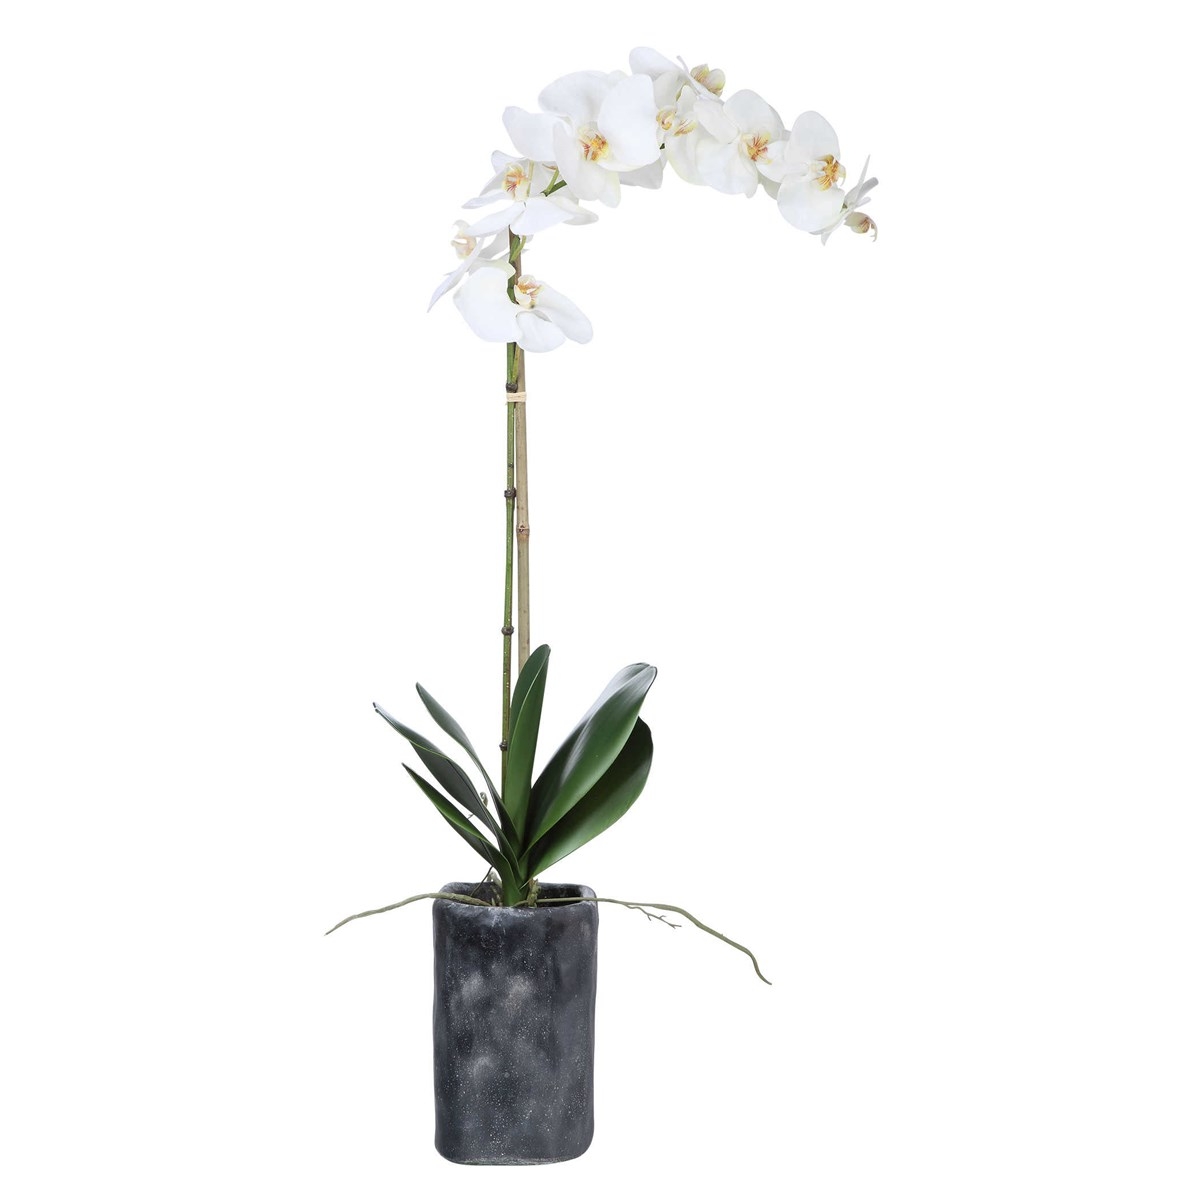 Eponine White Orchid - Image 0